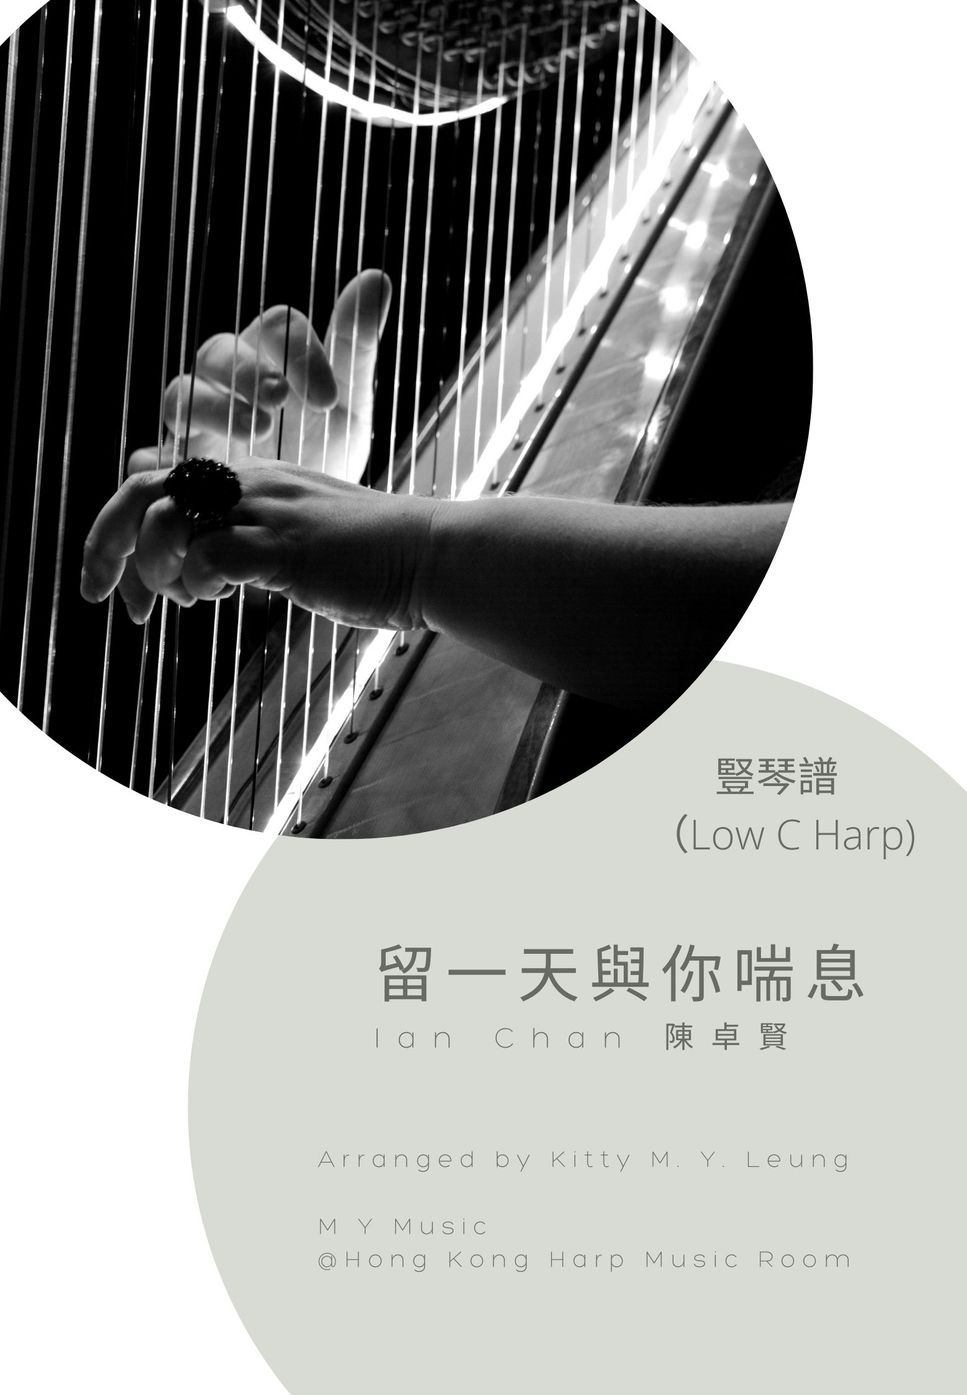 IAN CHAN 陳卓賢 - 留一天與你喘息 (Low C Harp) by Kitty M. Y. Leung